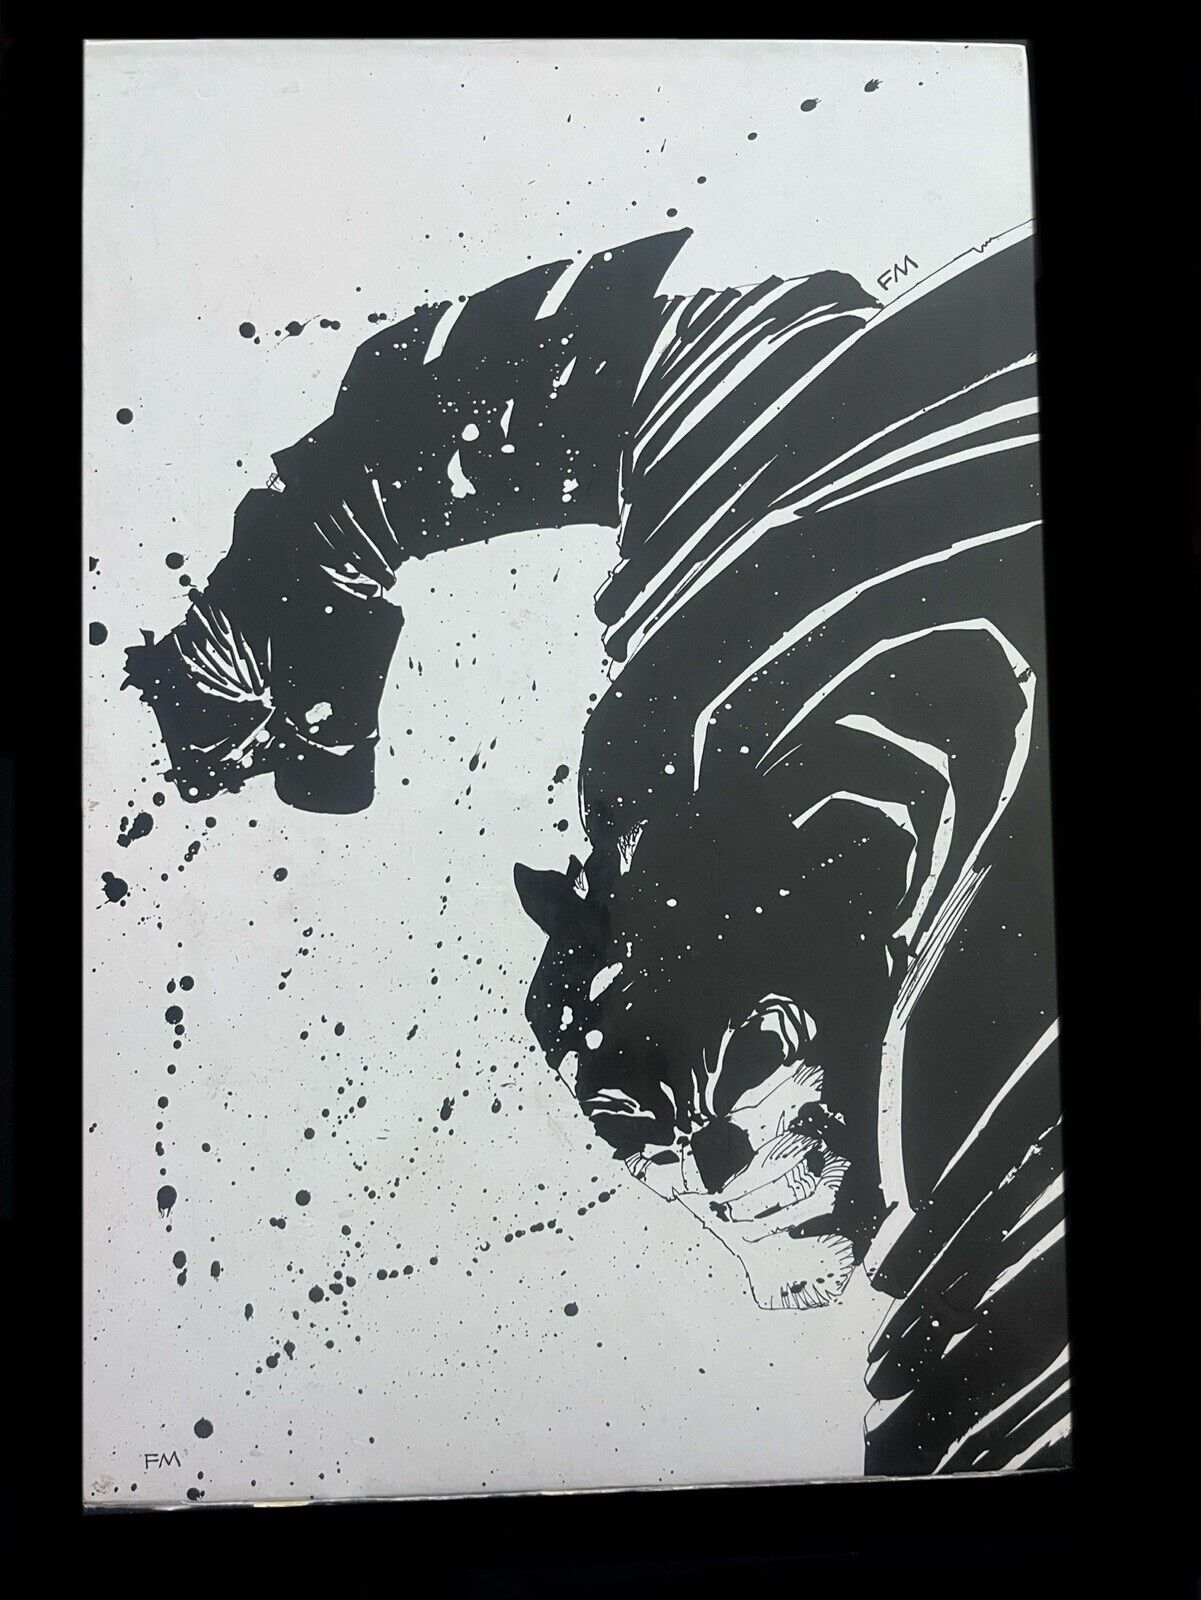 [DC Comics] Batman: Absolute Dark Knight HC Comic w/ Slipcover Large - Very good